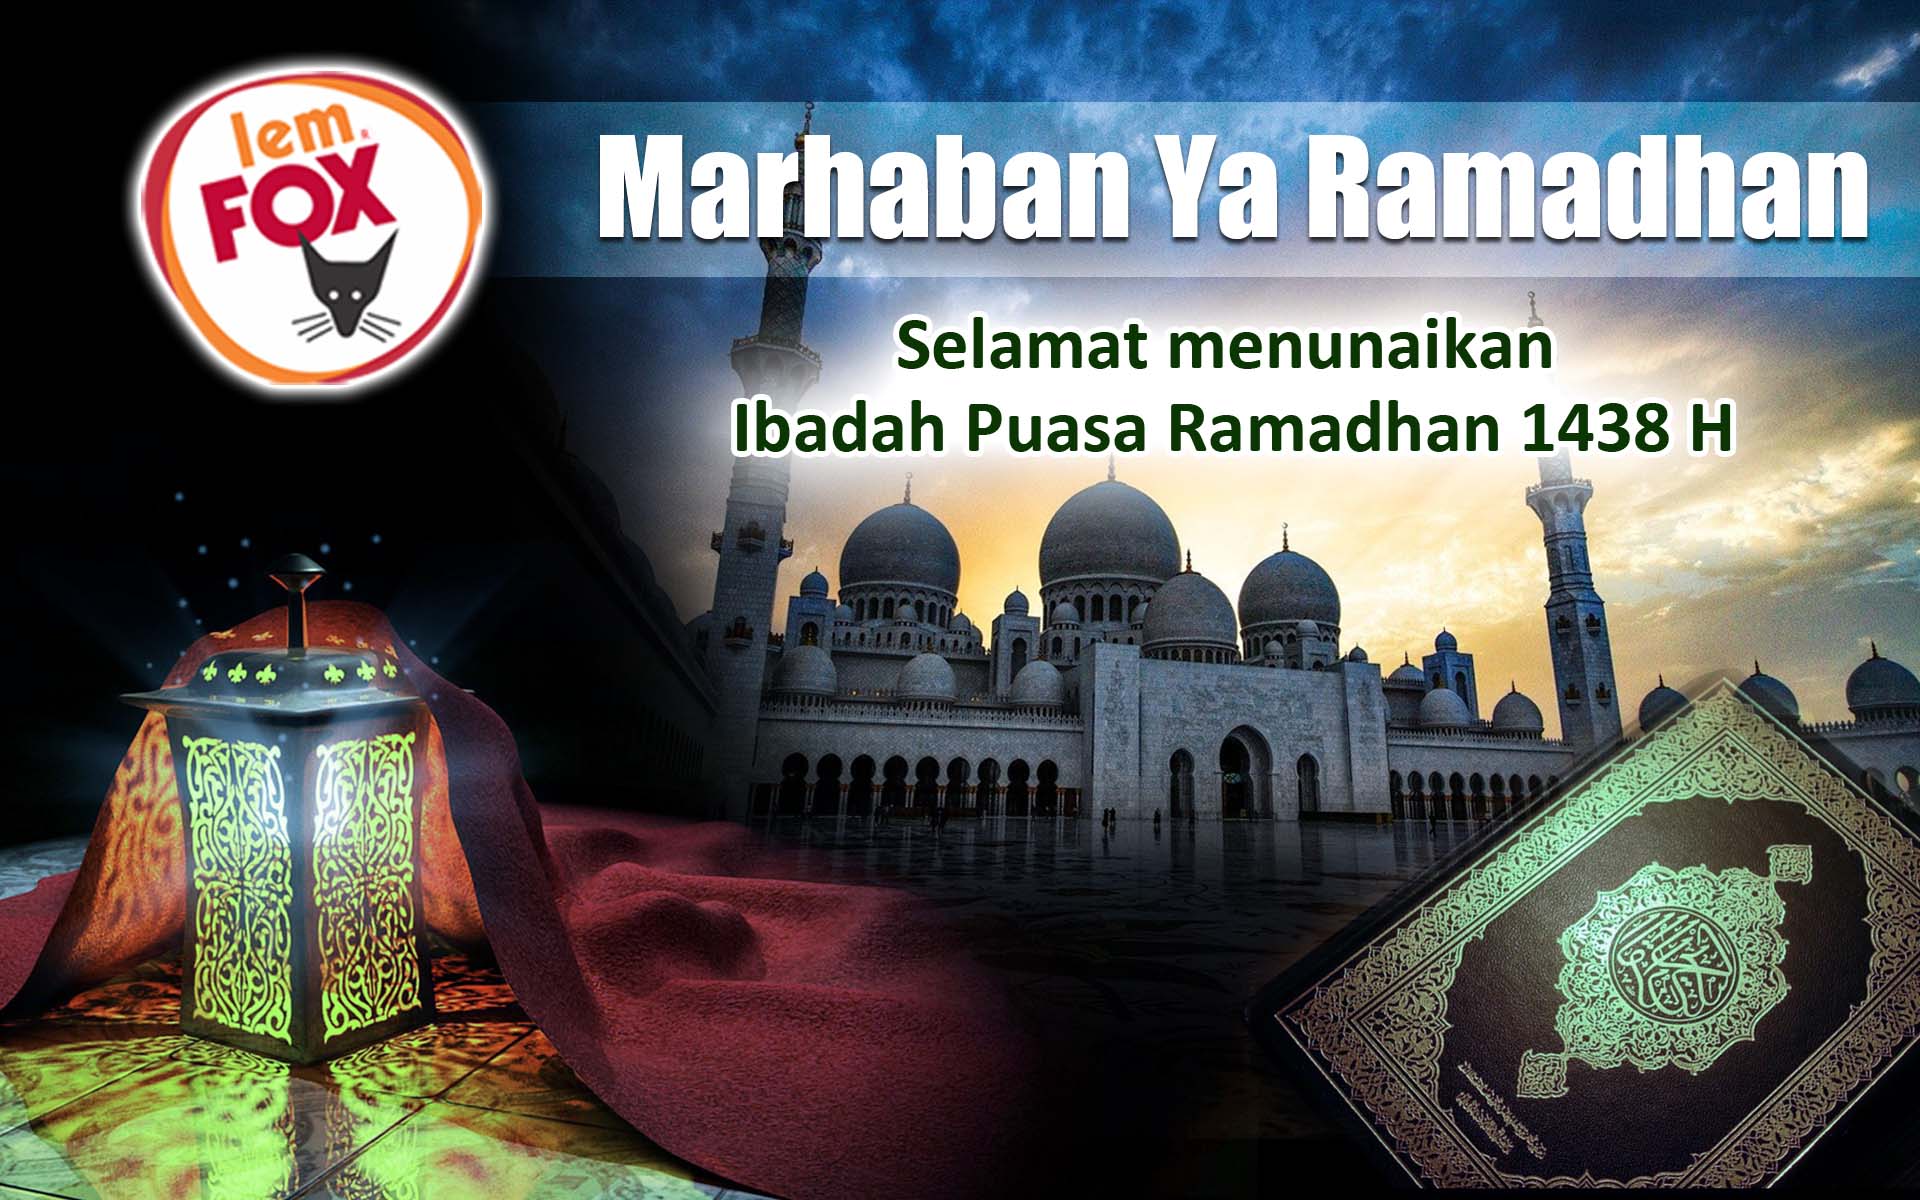 Marhaban Ya Ramadhan 2017 - Sheikh Zayed Mosque , HD Wallpaper & Backgrounds